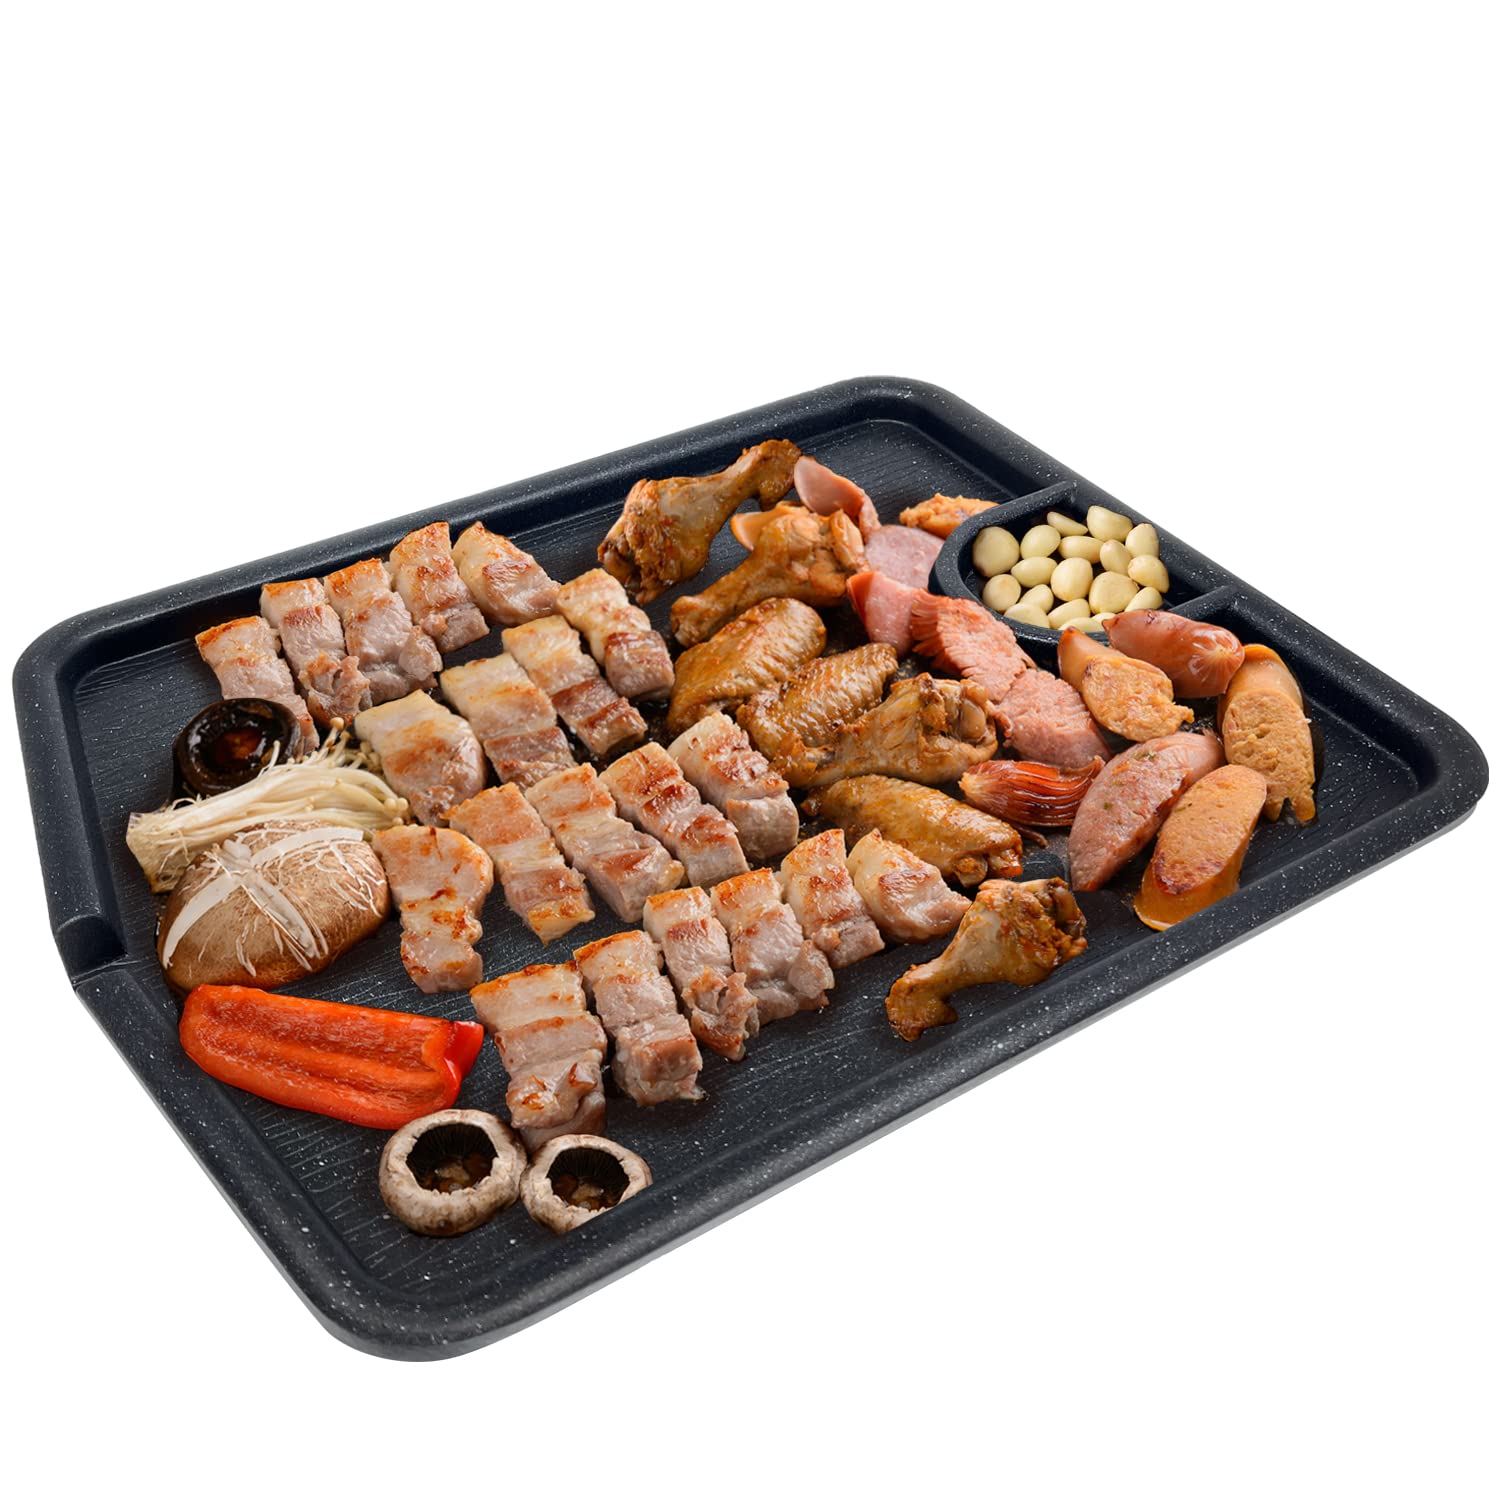 Barbecue Stovetop Plate, Korean Barbecue Grill